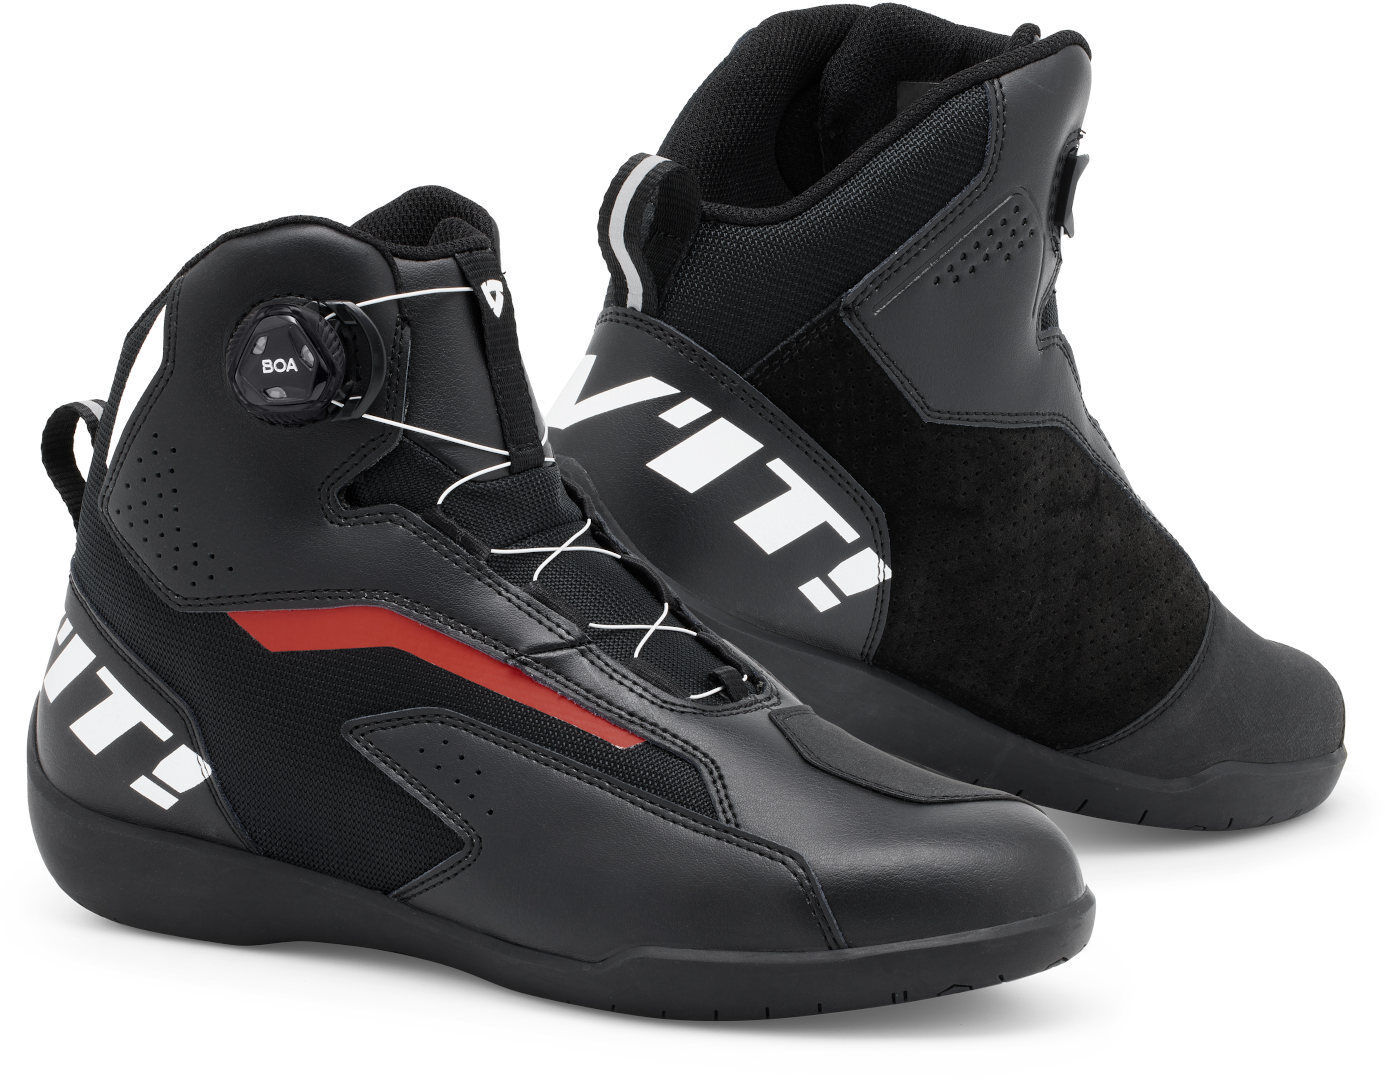 Revit Jetspeed Pro Zapatos de motocicleta - Negro Blanco Rojo (40)